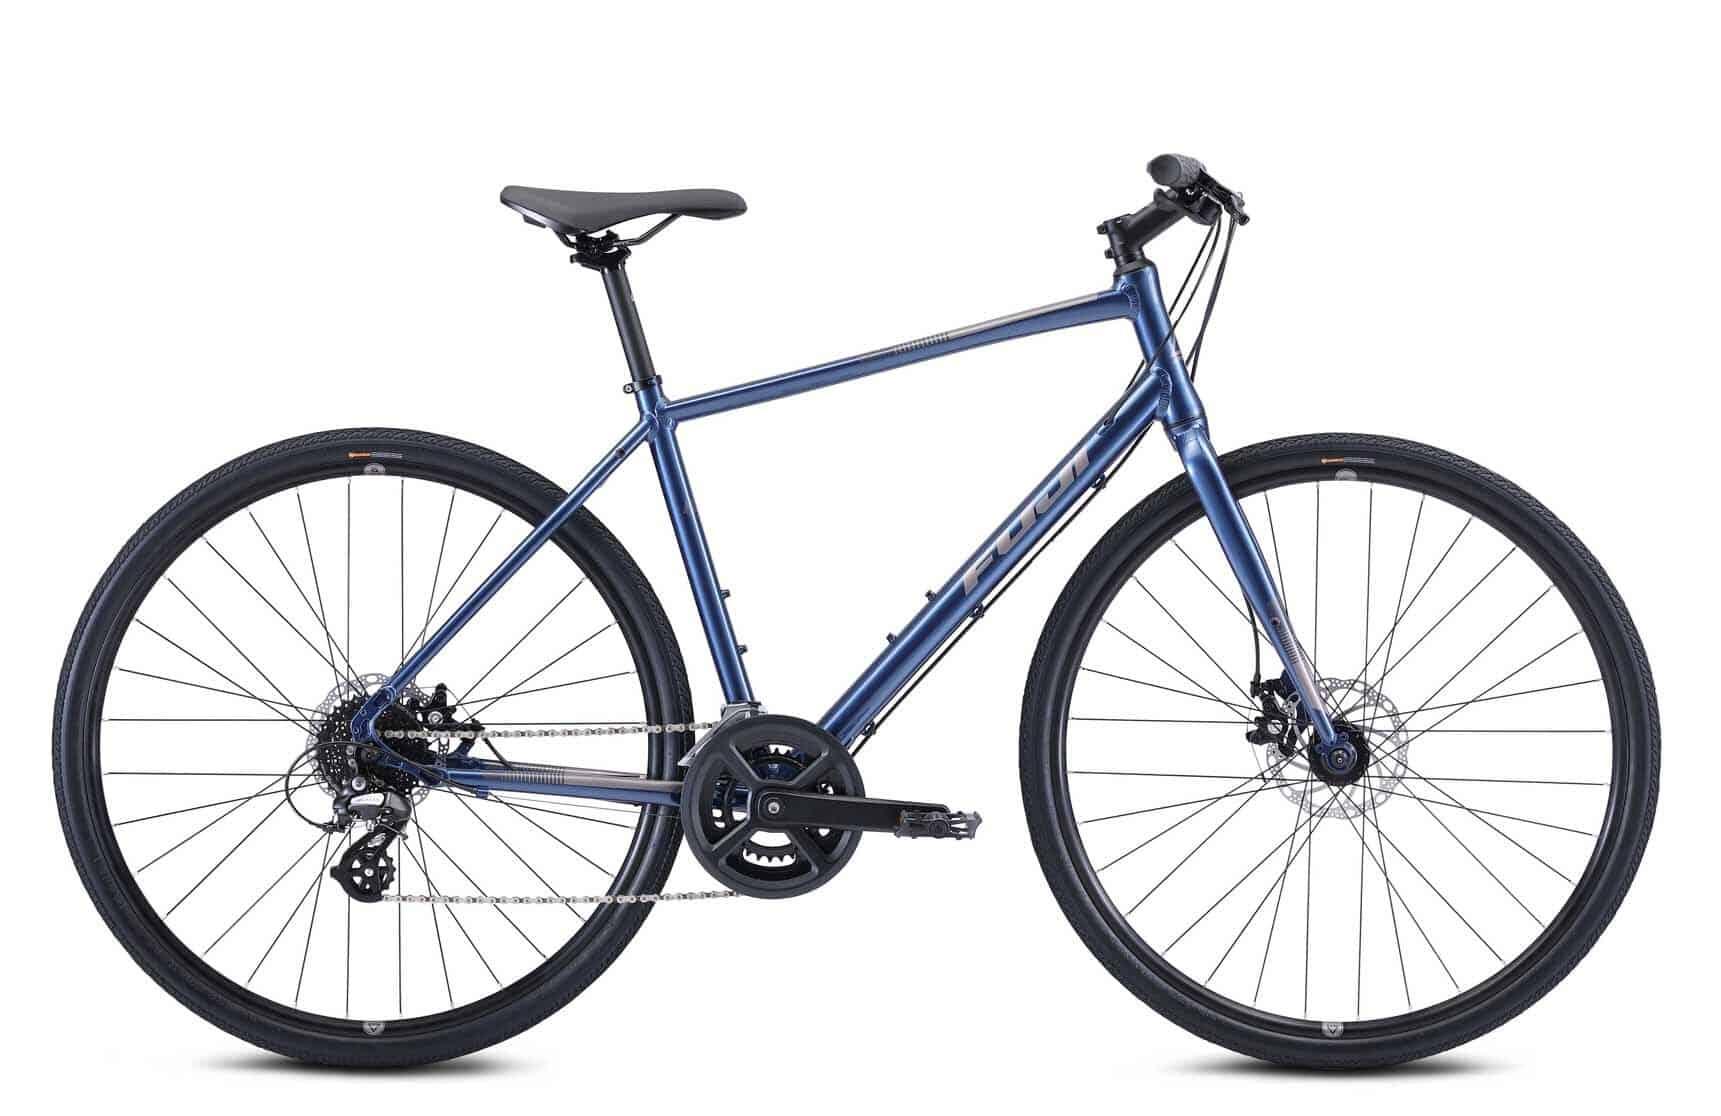 دراجة هوائية قياس 15 انش Absolute Bike - Fuji